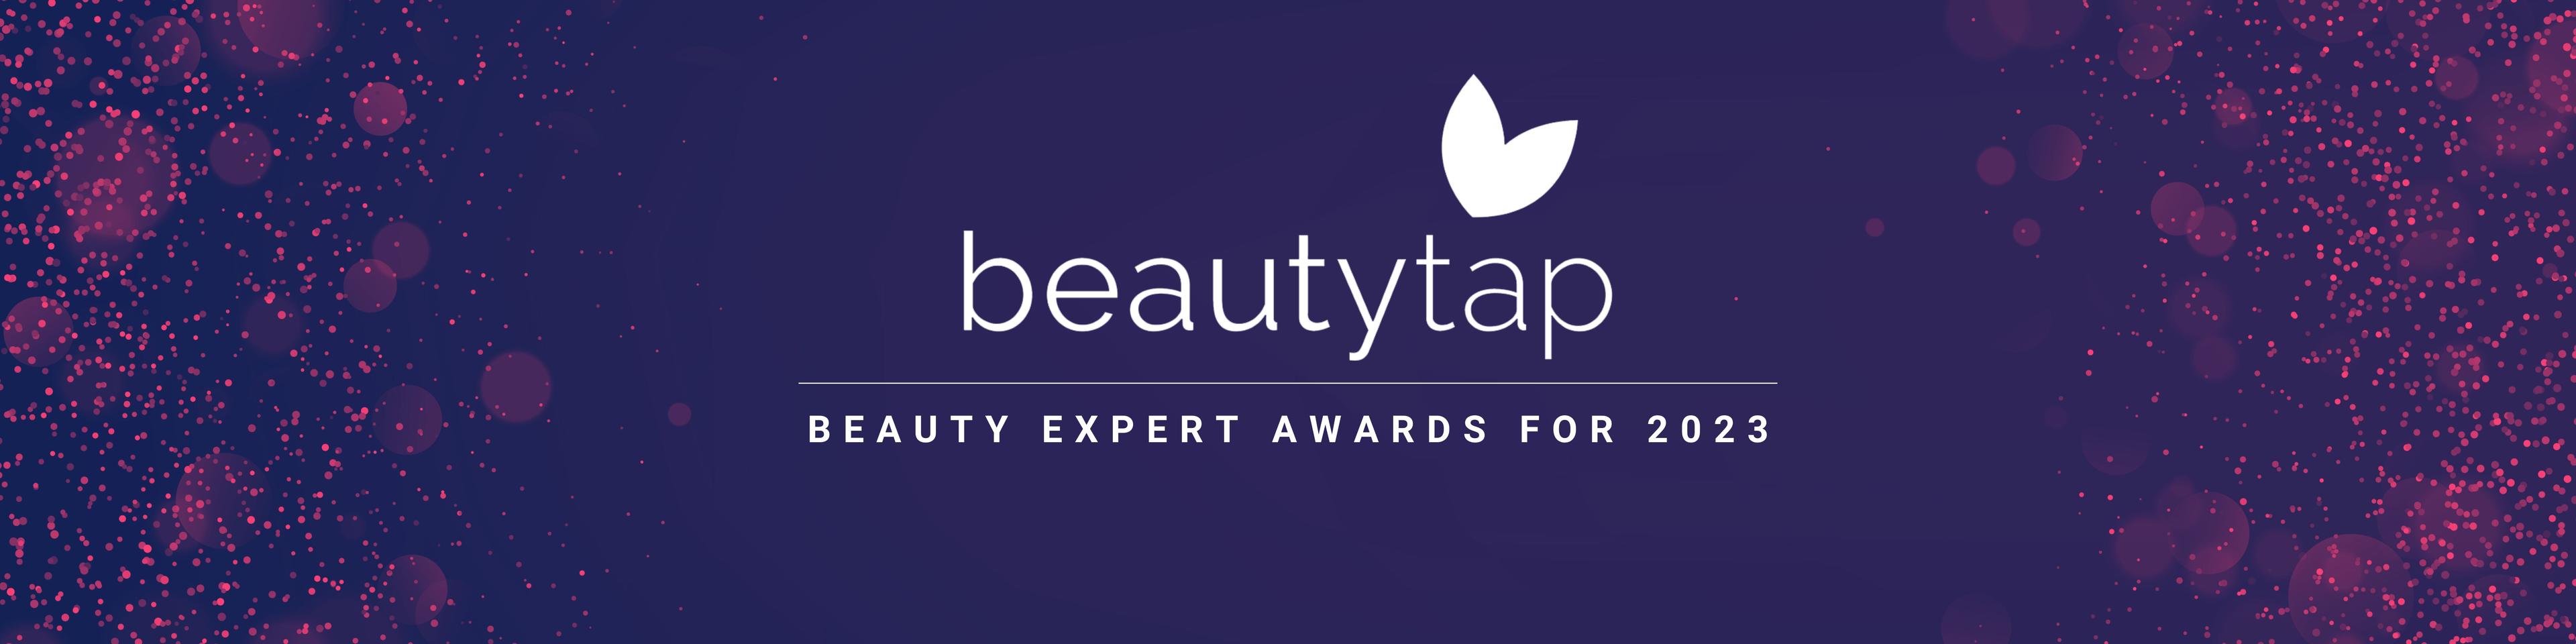 Beautytap’s Beauty Expert Awards for 2023